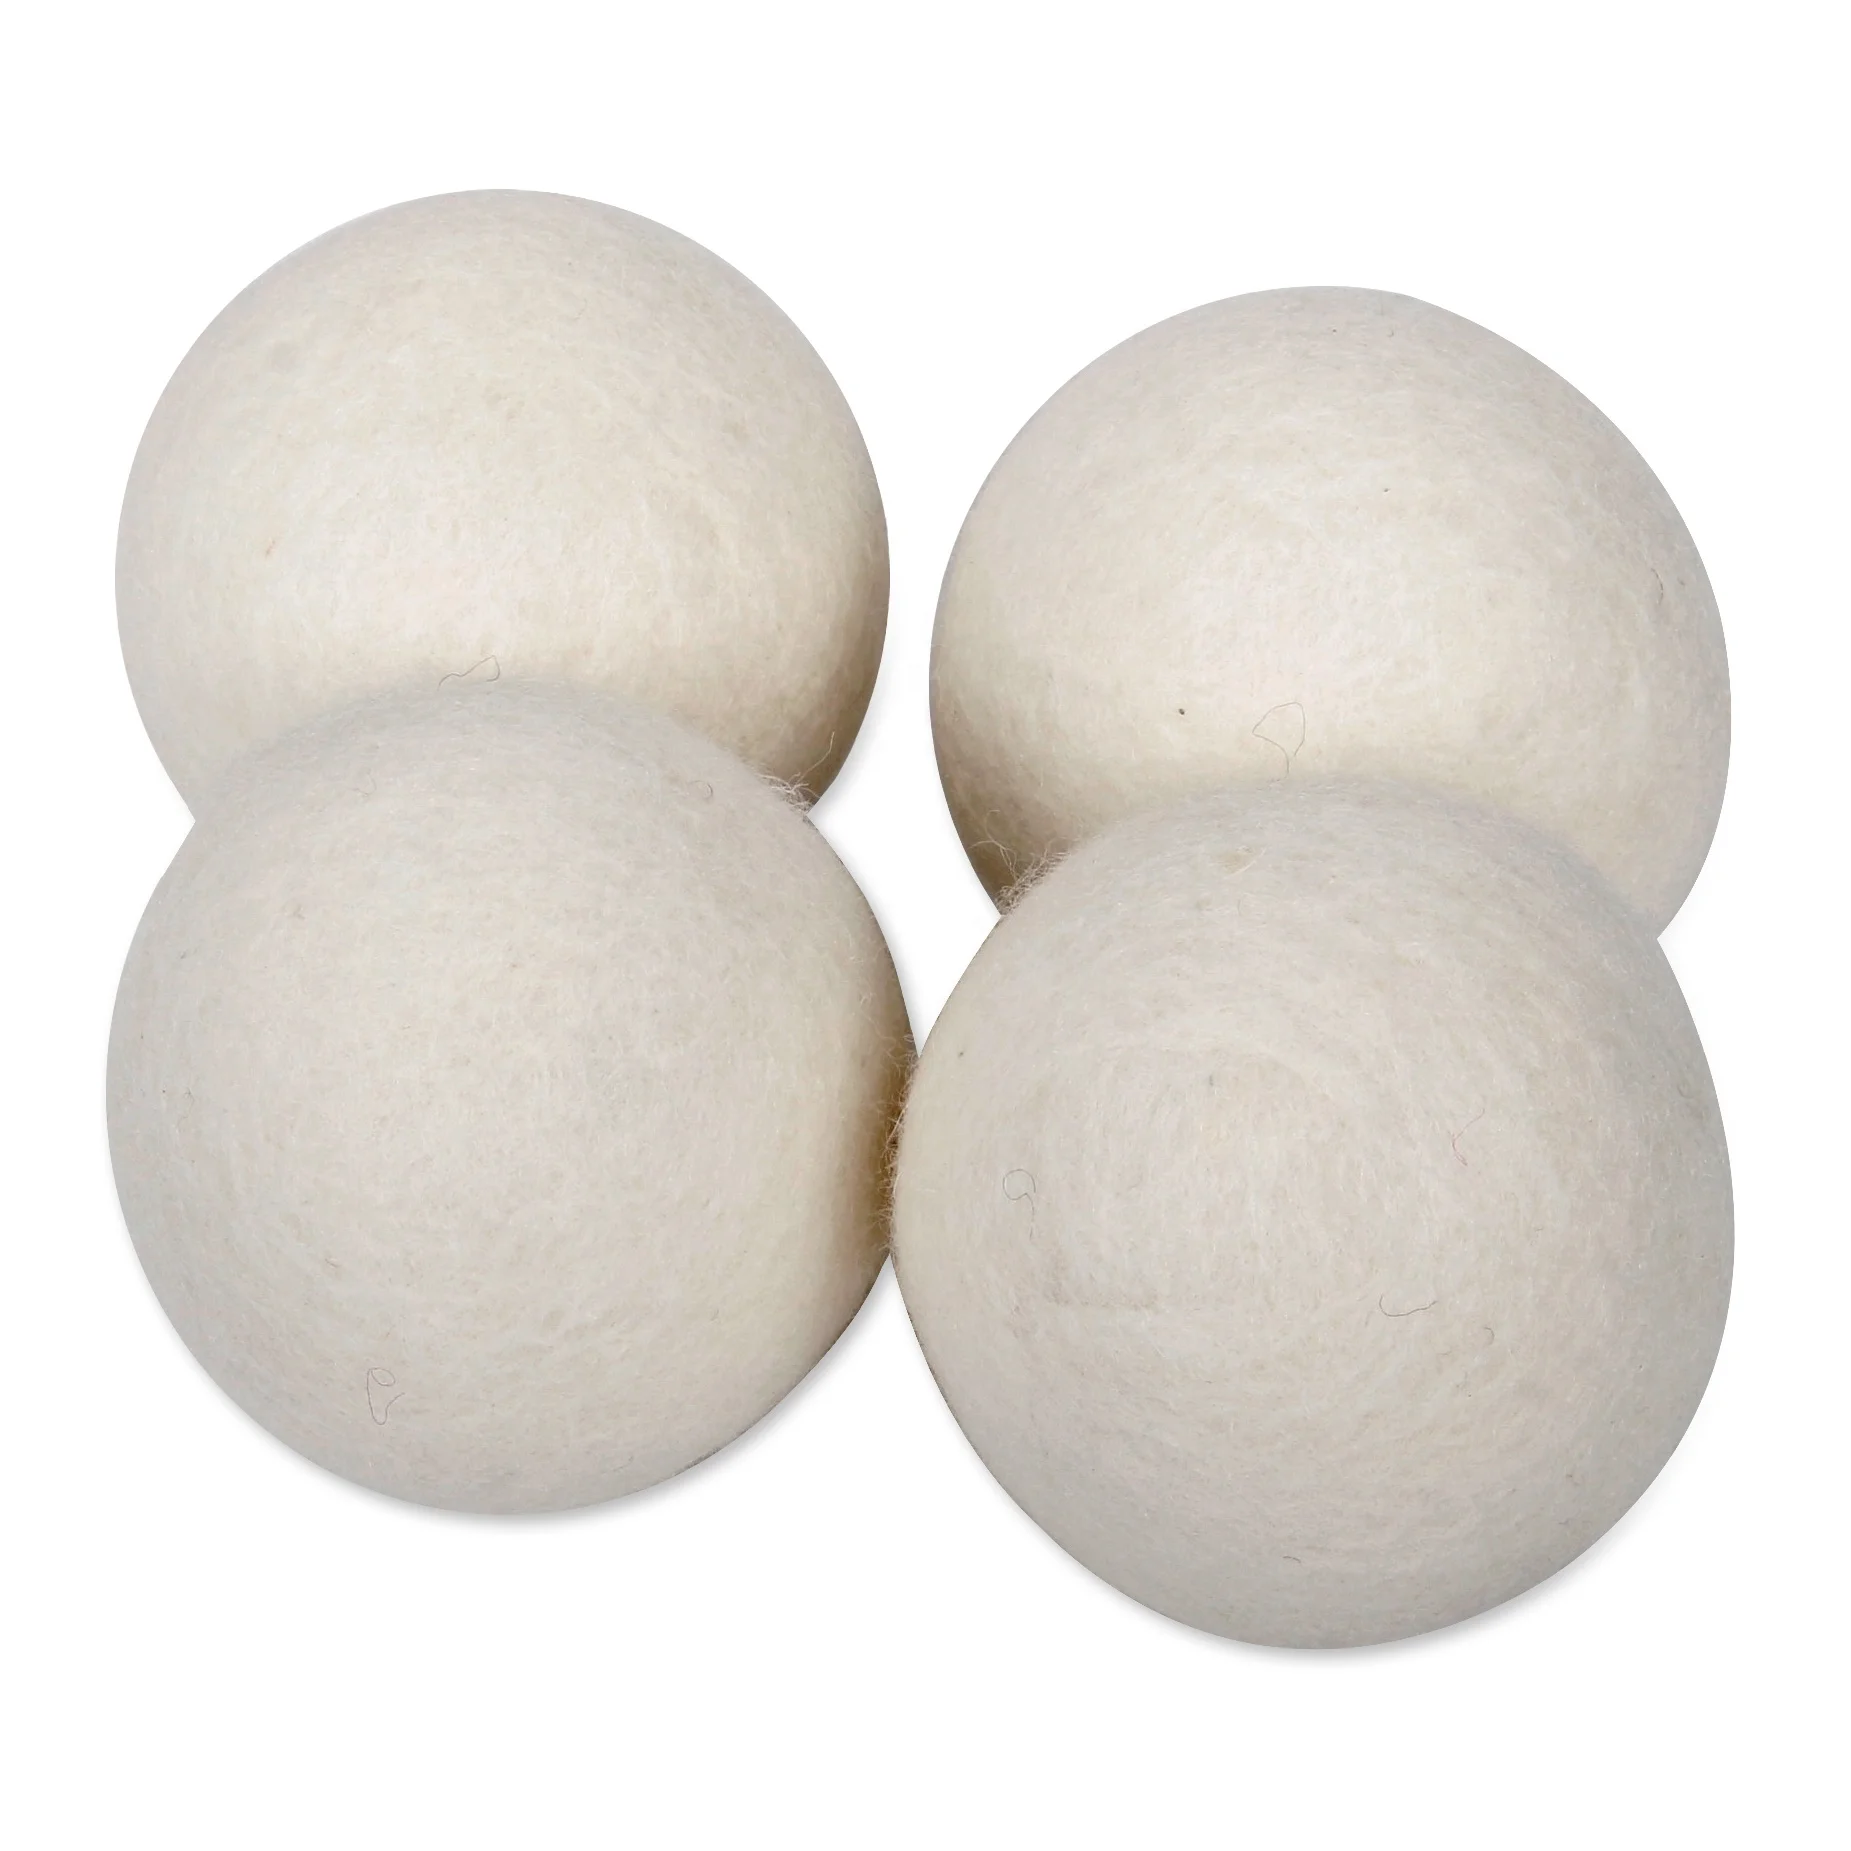 wool dryer balls where to buy